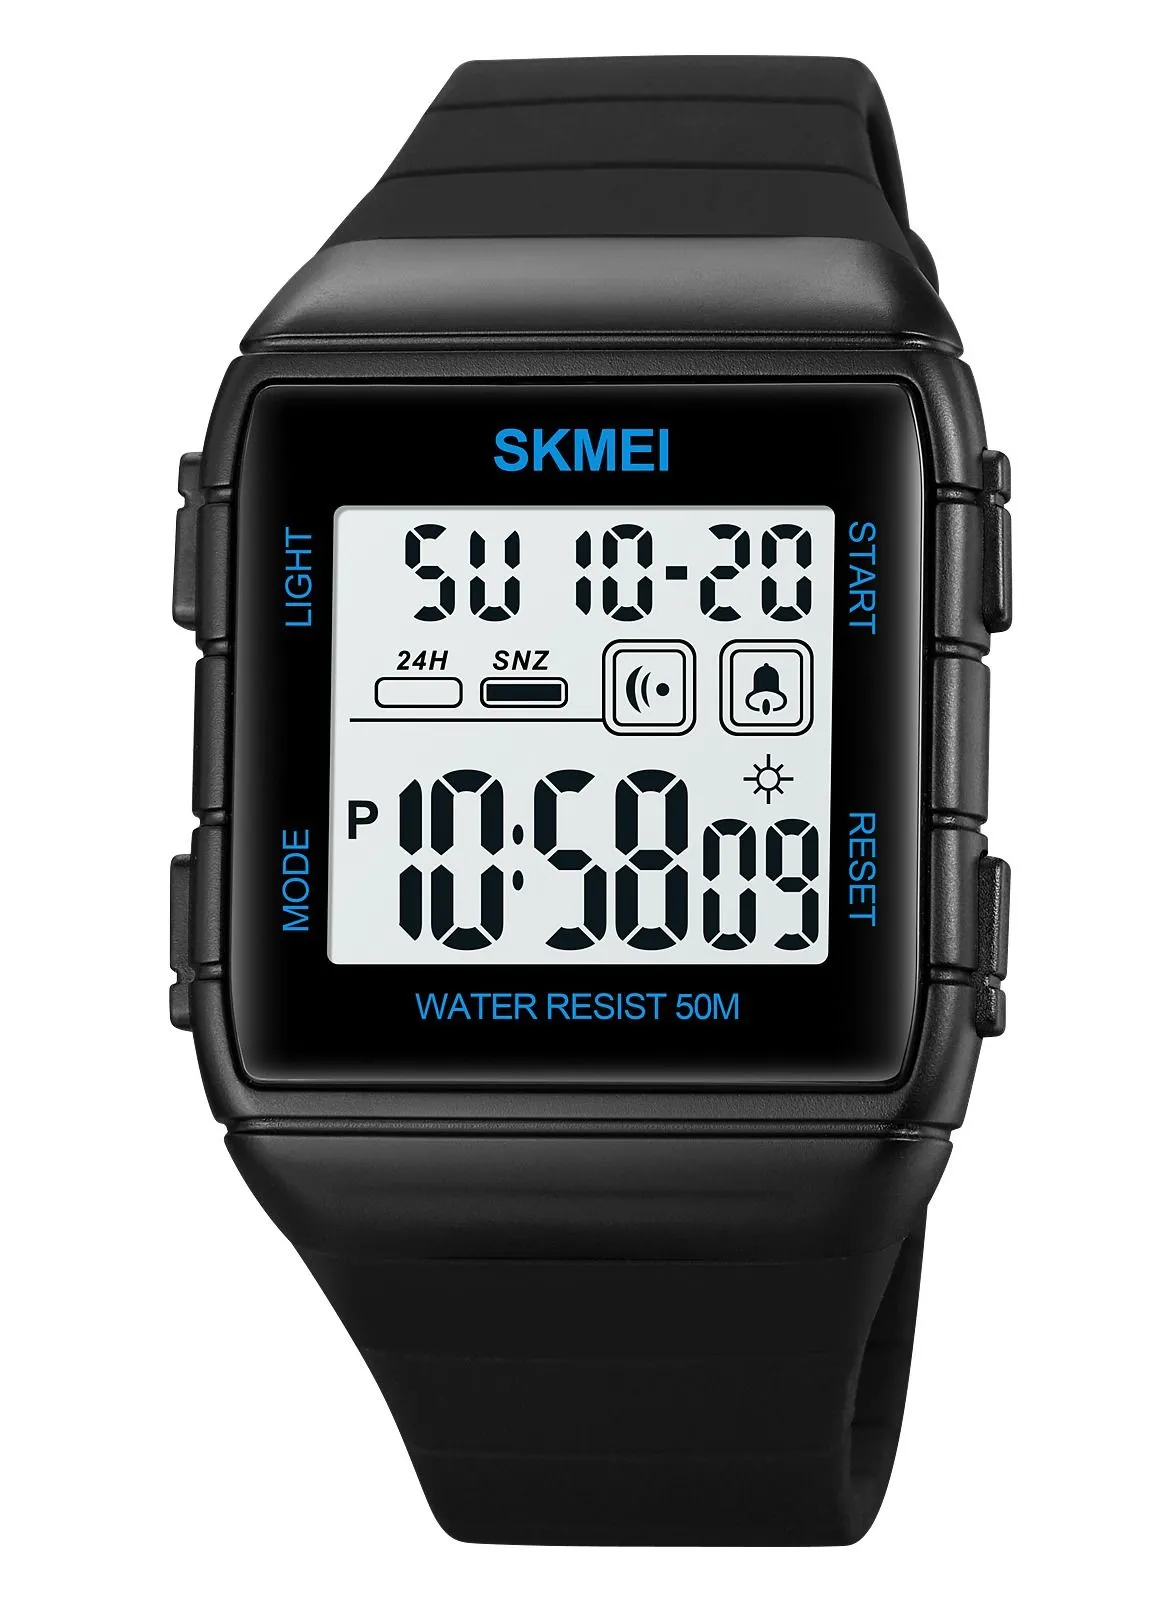 SKMEI Watches For Men Water Resistant Multifunction Digital Watch - Black